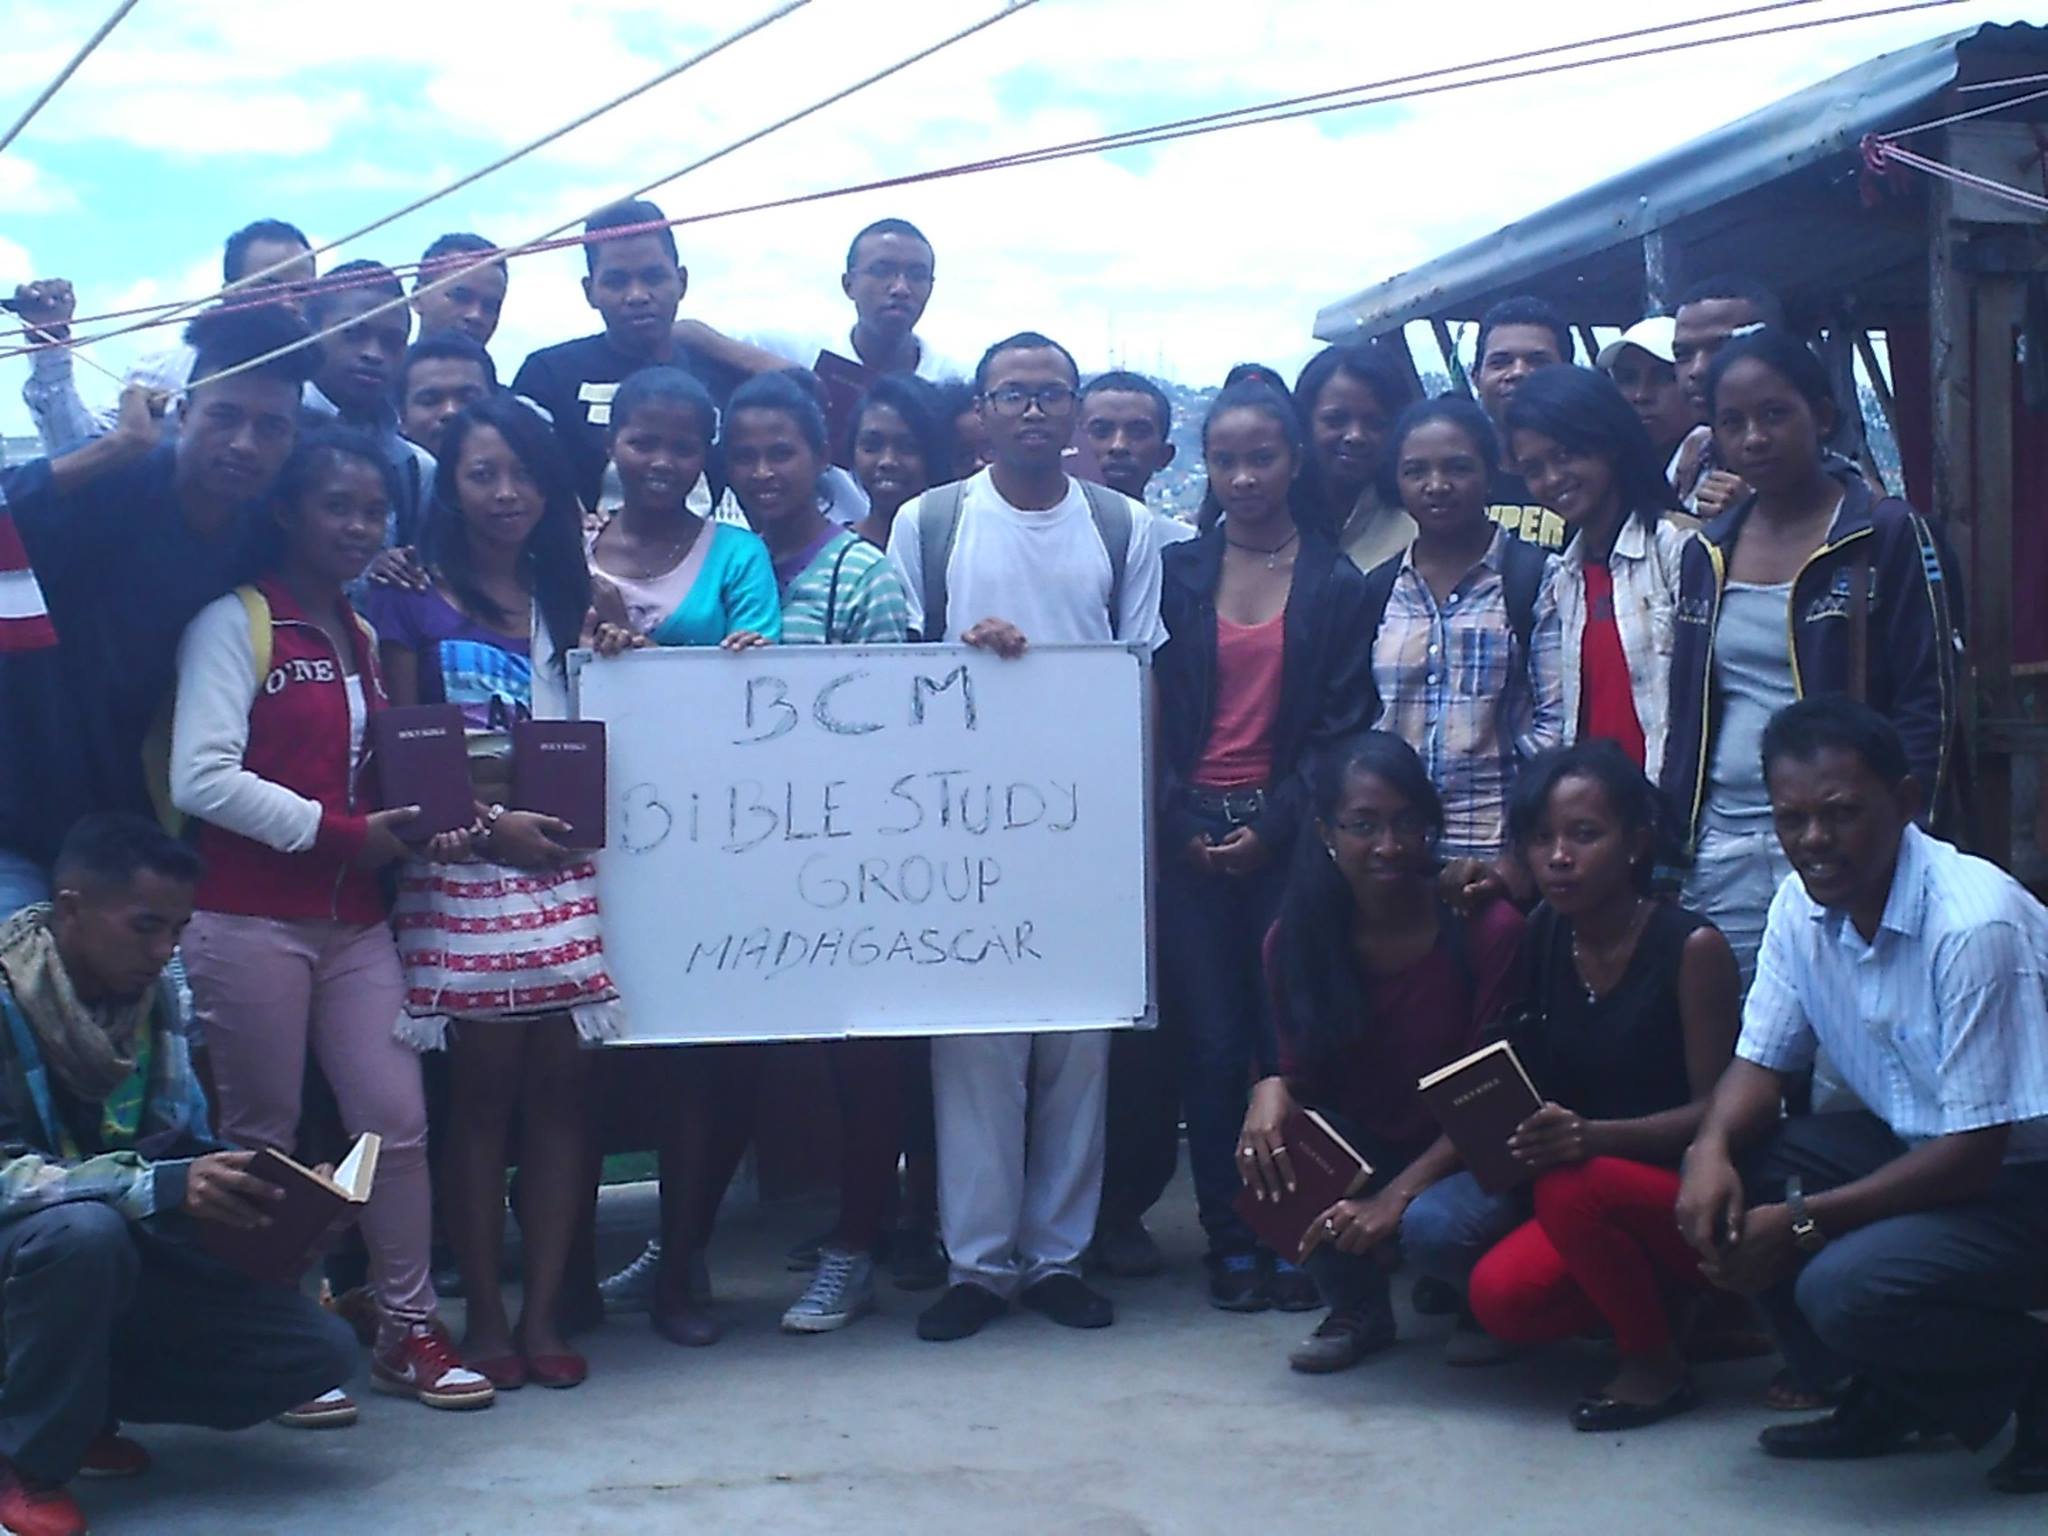 English Bible Study Group-Madagascar